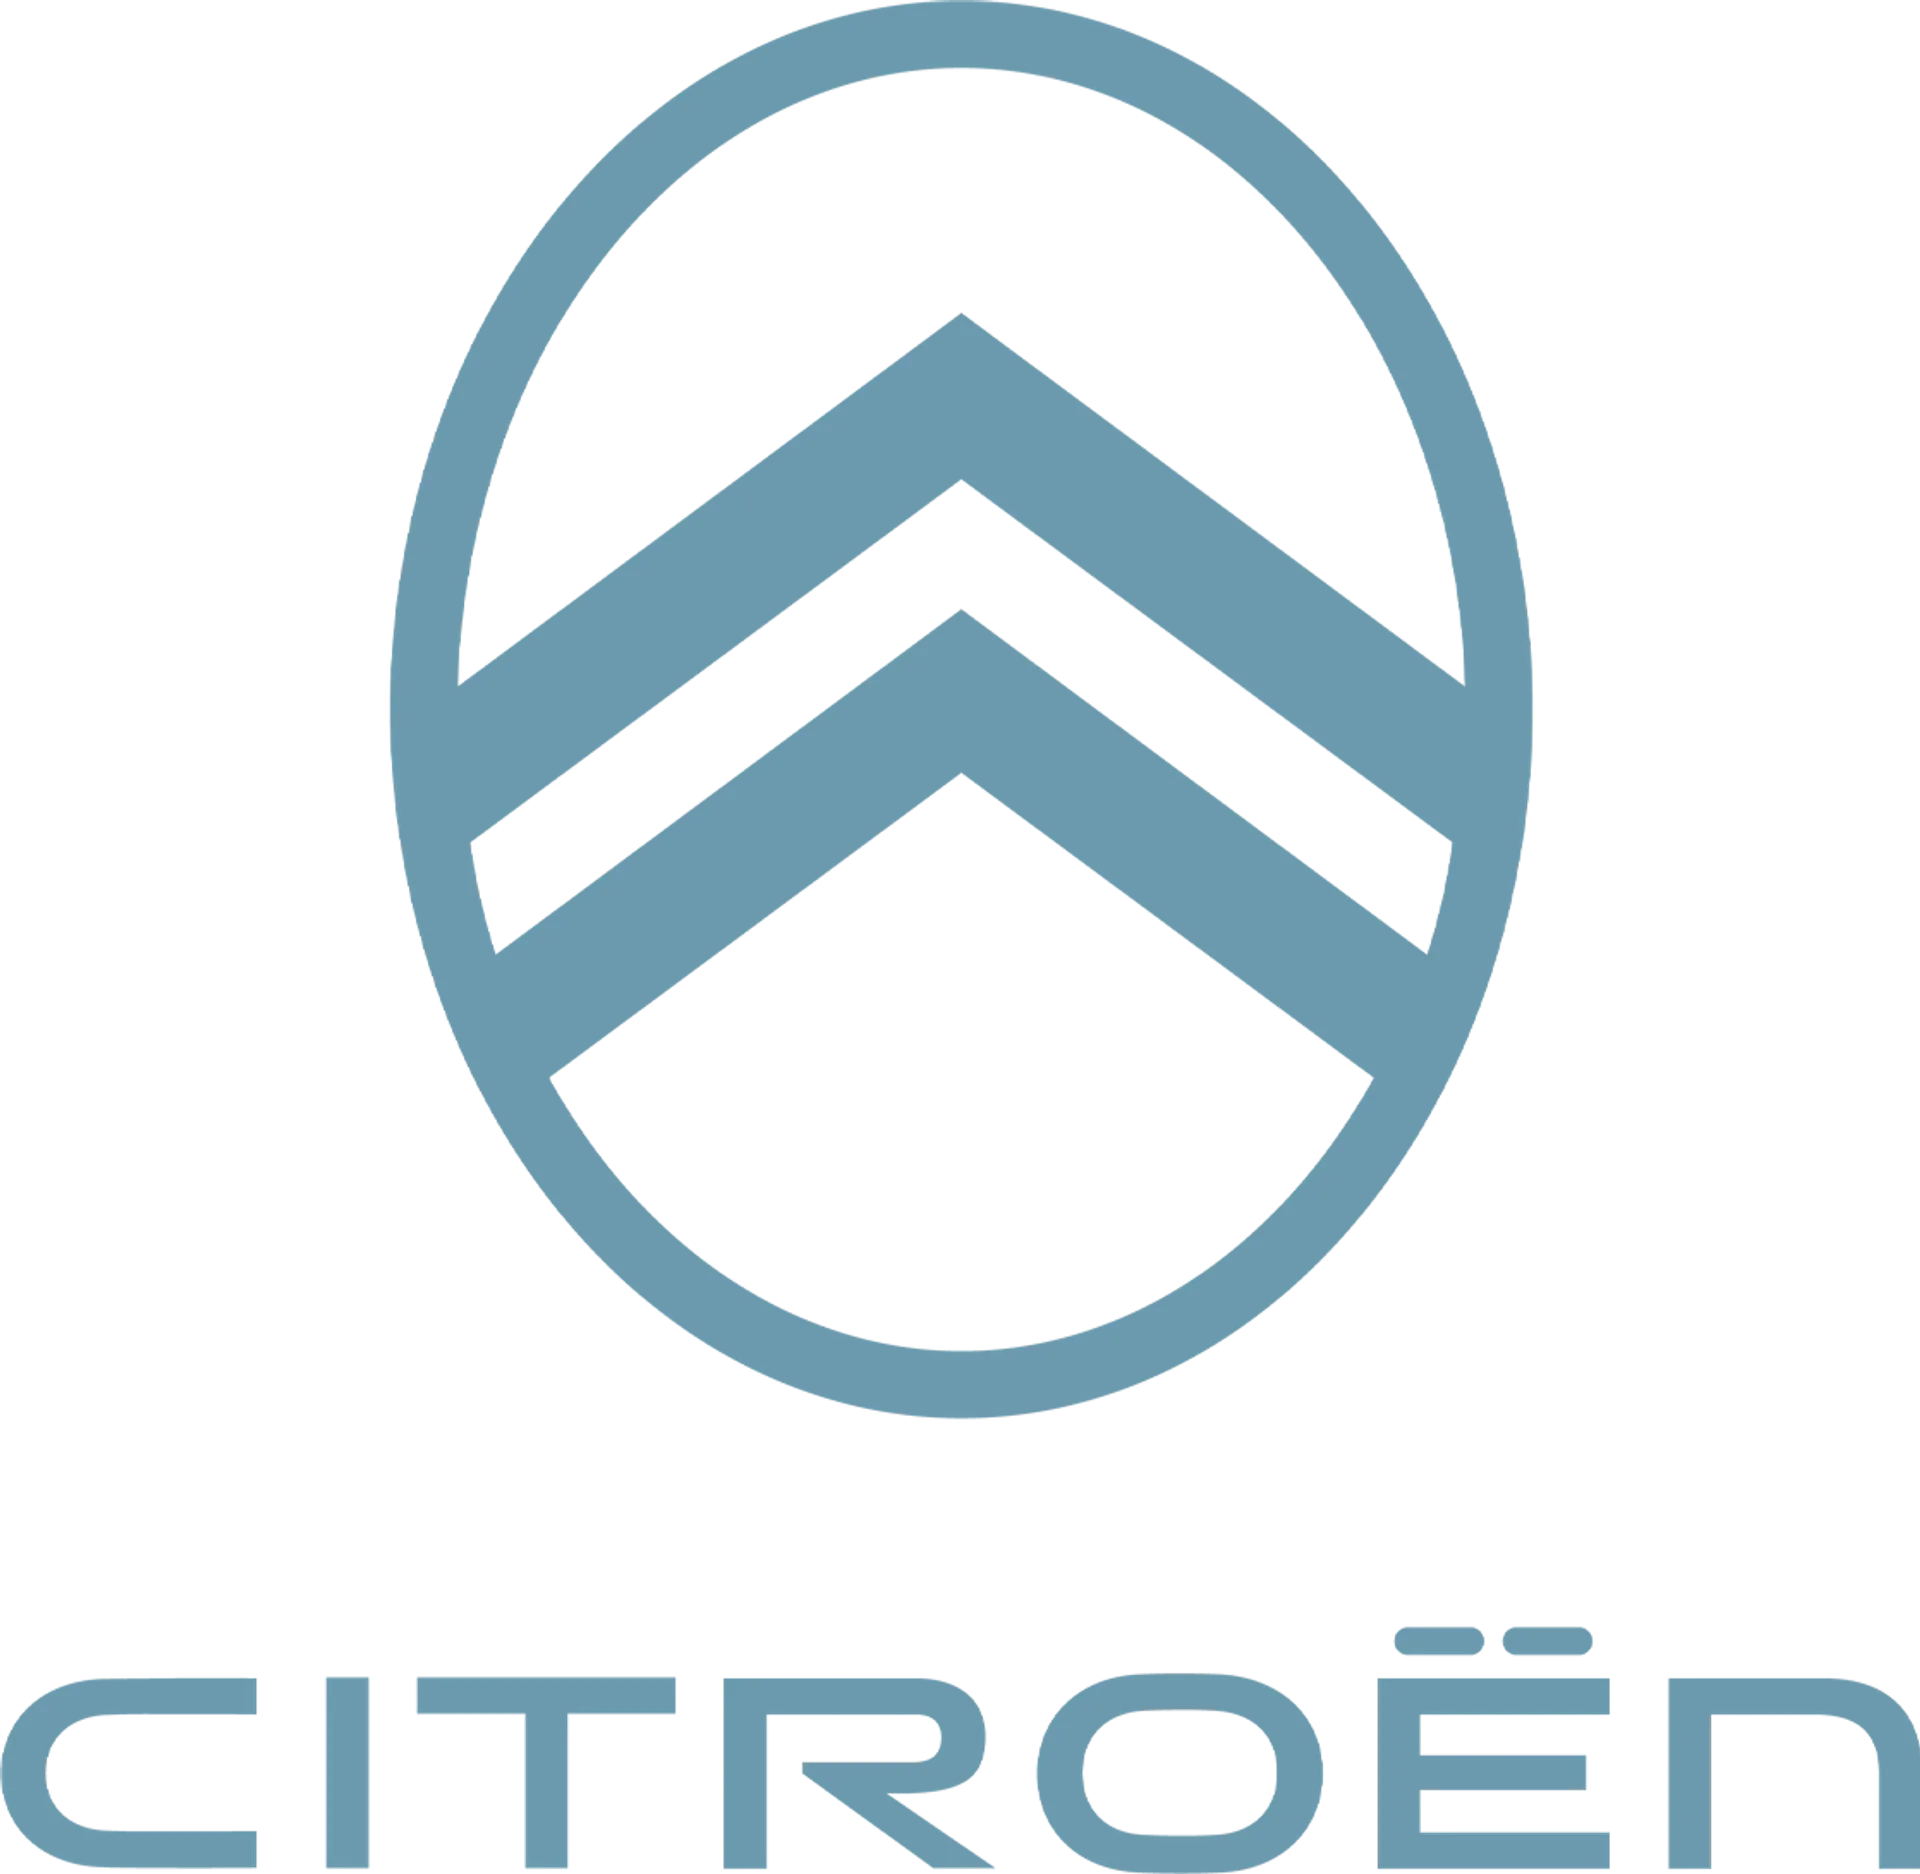 CITROËN logo